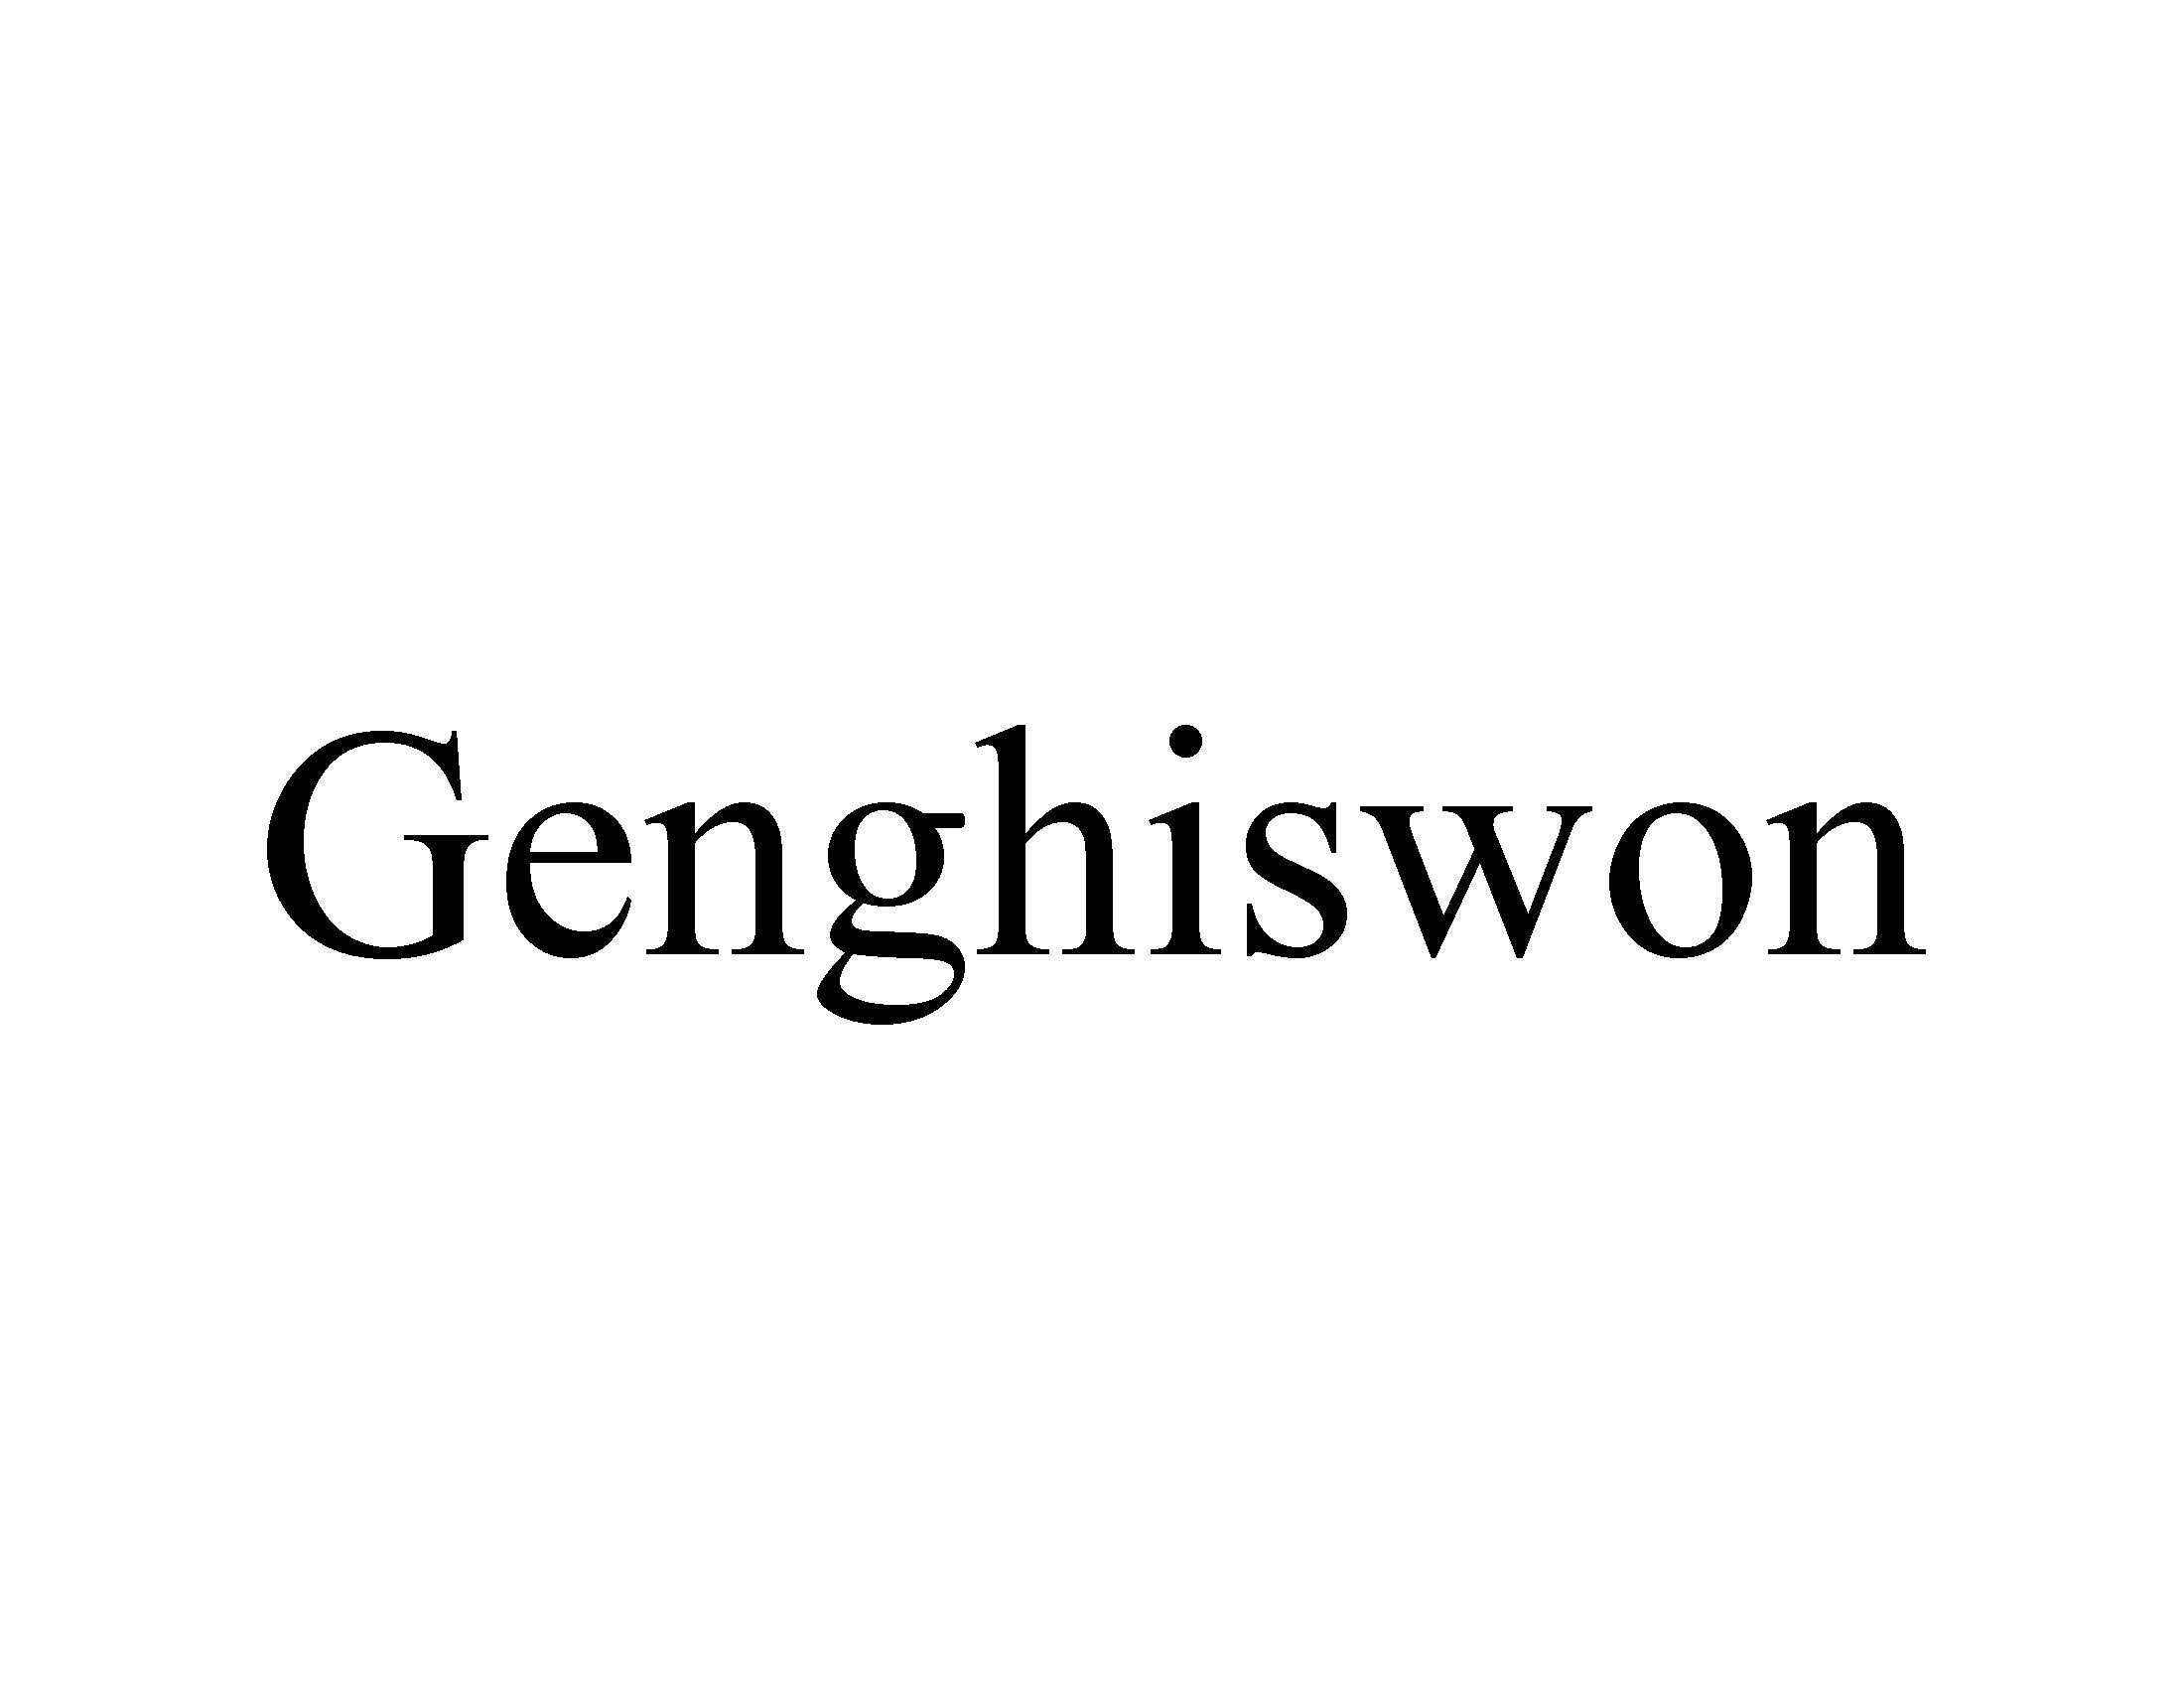 Genghiswon